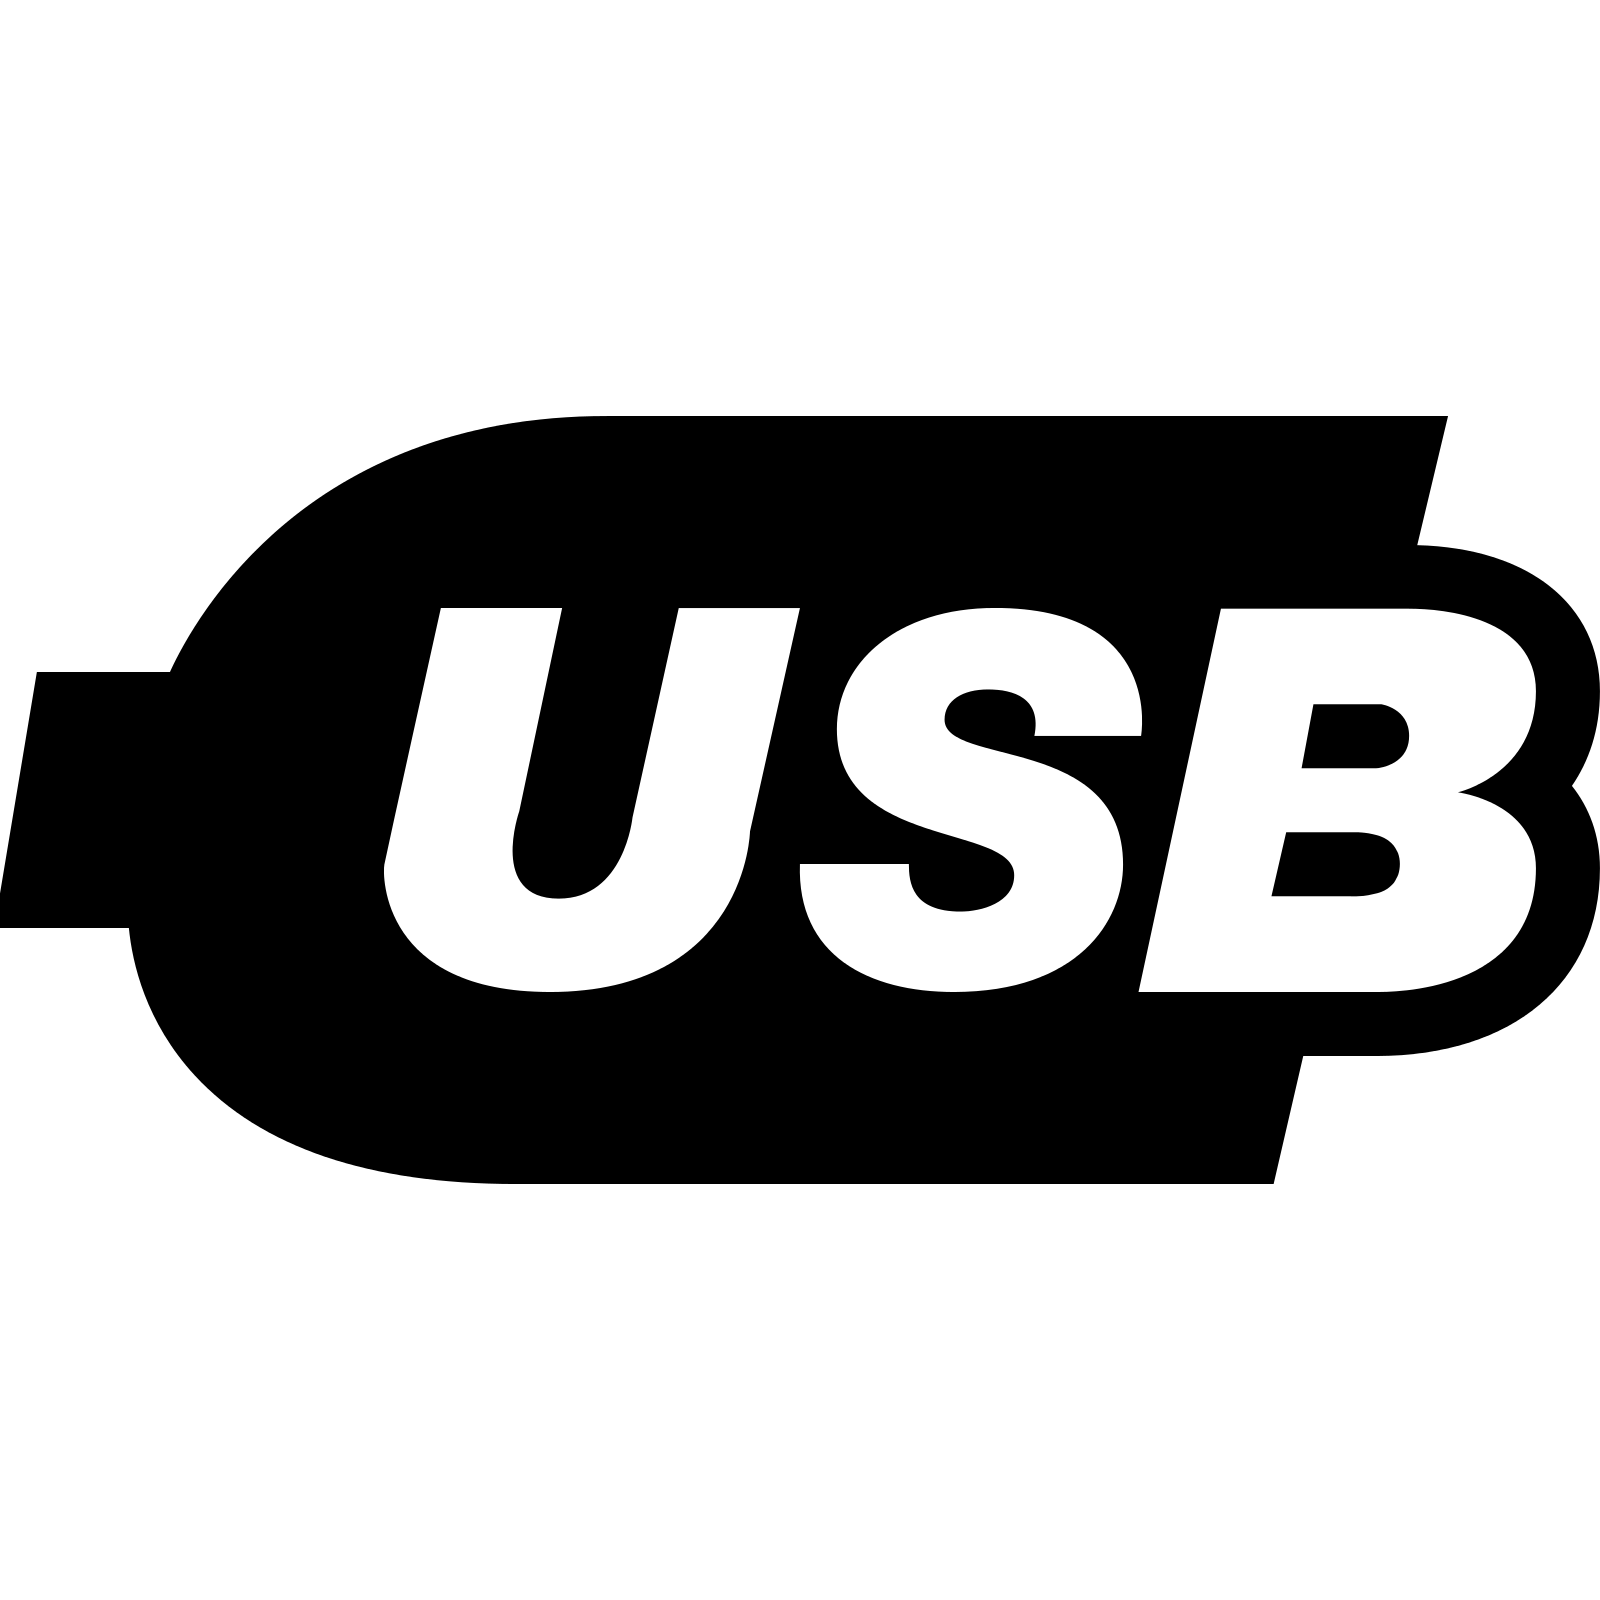 USB Logo - Usb with Logos